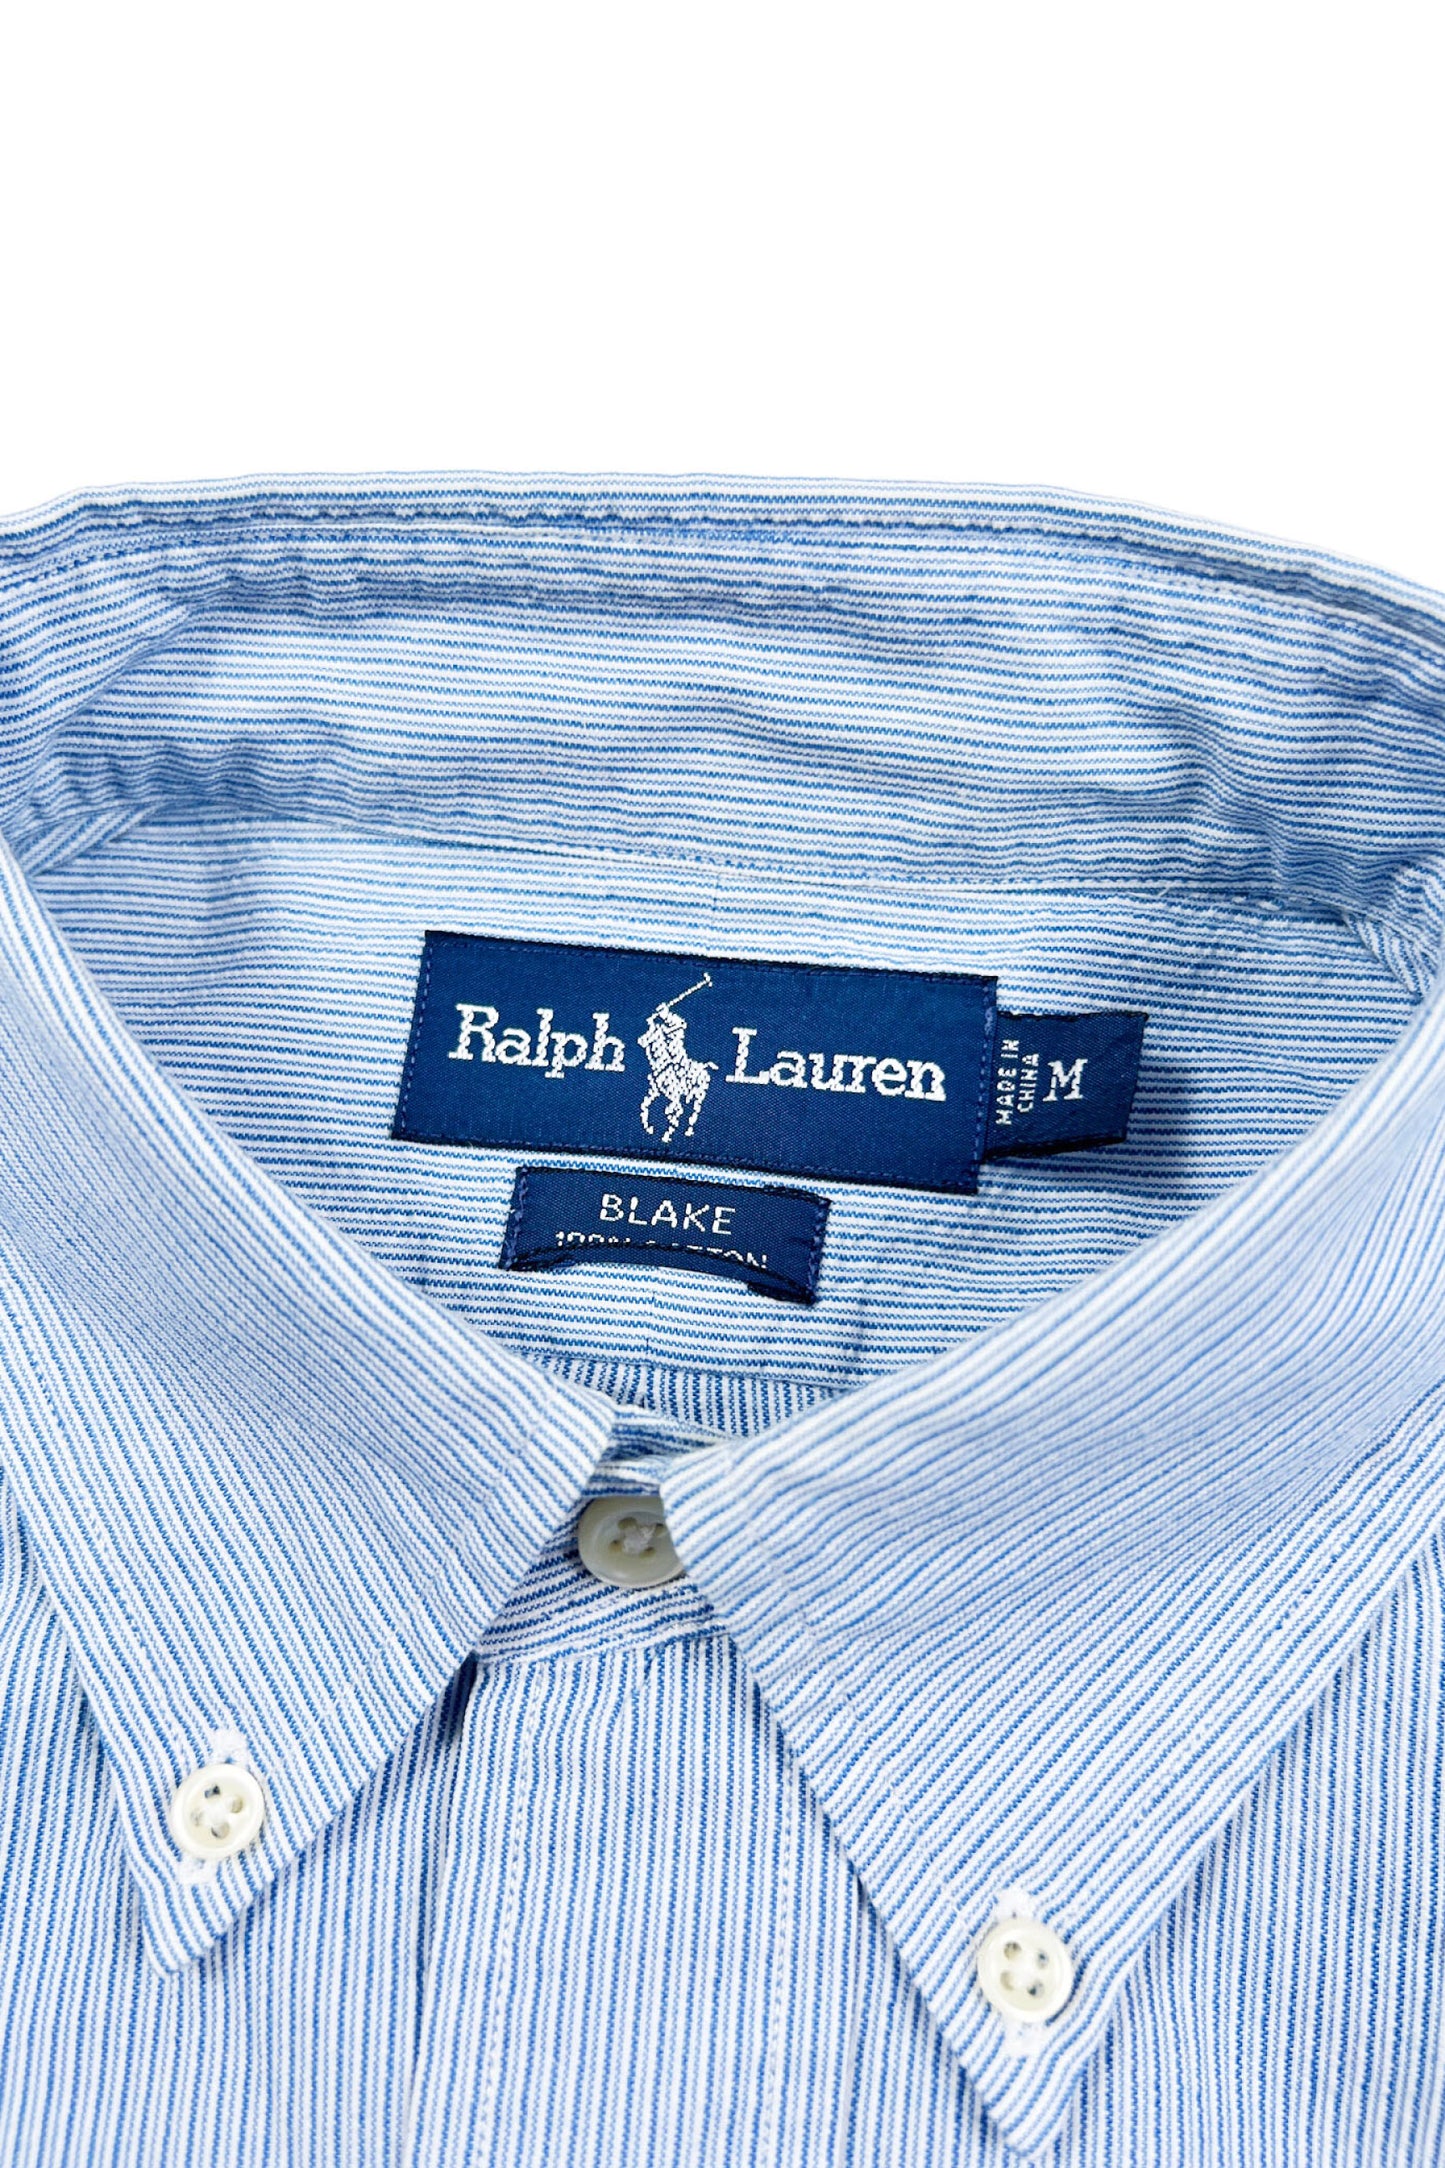 90‘s Ralph Lauren BLAKE stripe shirt